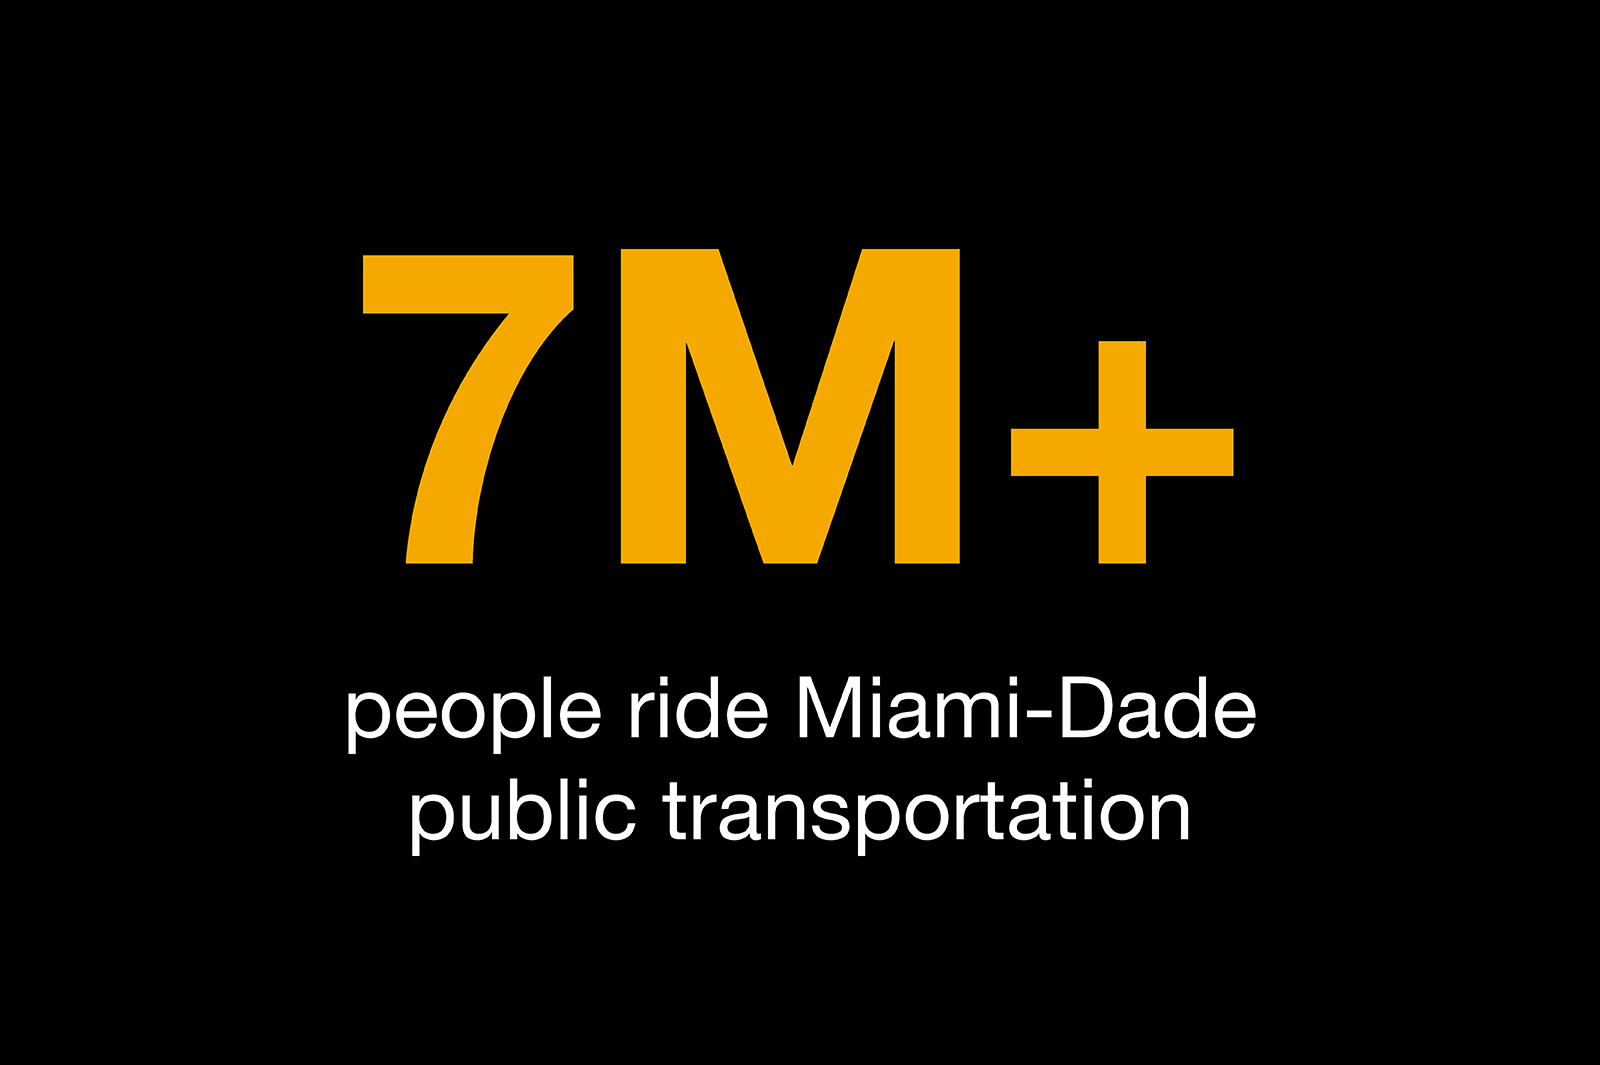 &M+ people ride Miami-Dade public transportation.